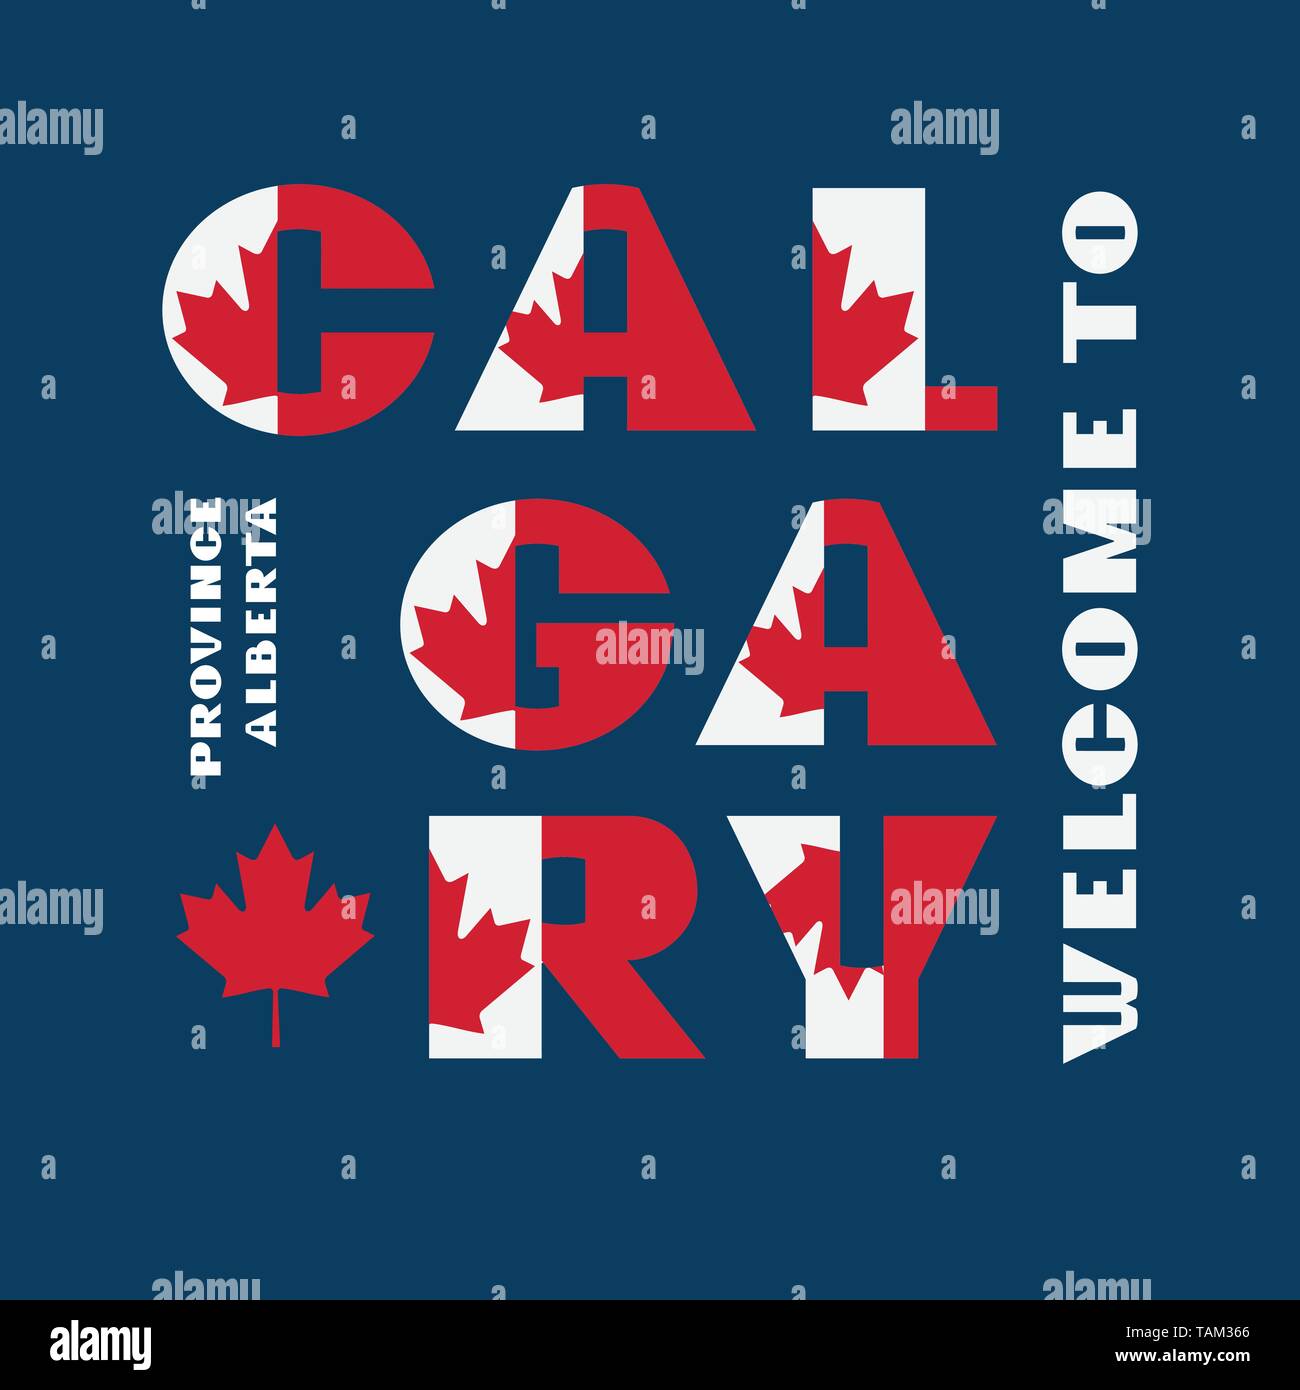 Kanada Flagge stil Motivation Poster mit Text Willkommen Calgary, Alberta. Moderne Typografie für Corporate Travel Company Grafik drucken, hipster Mode Stock Vektor